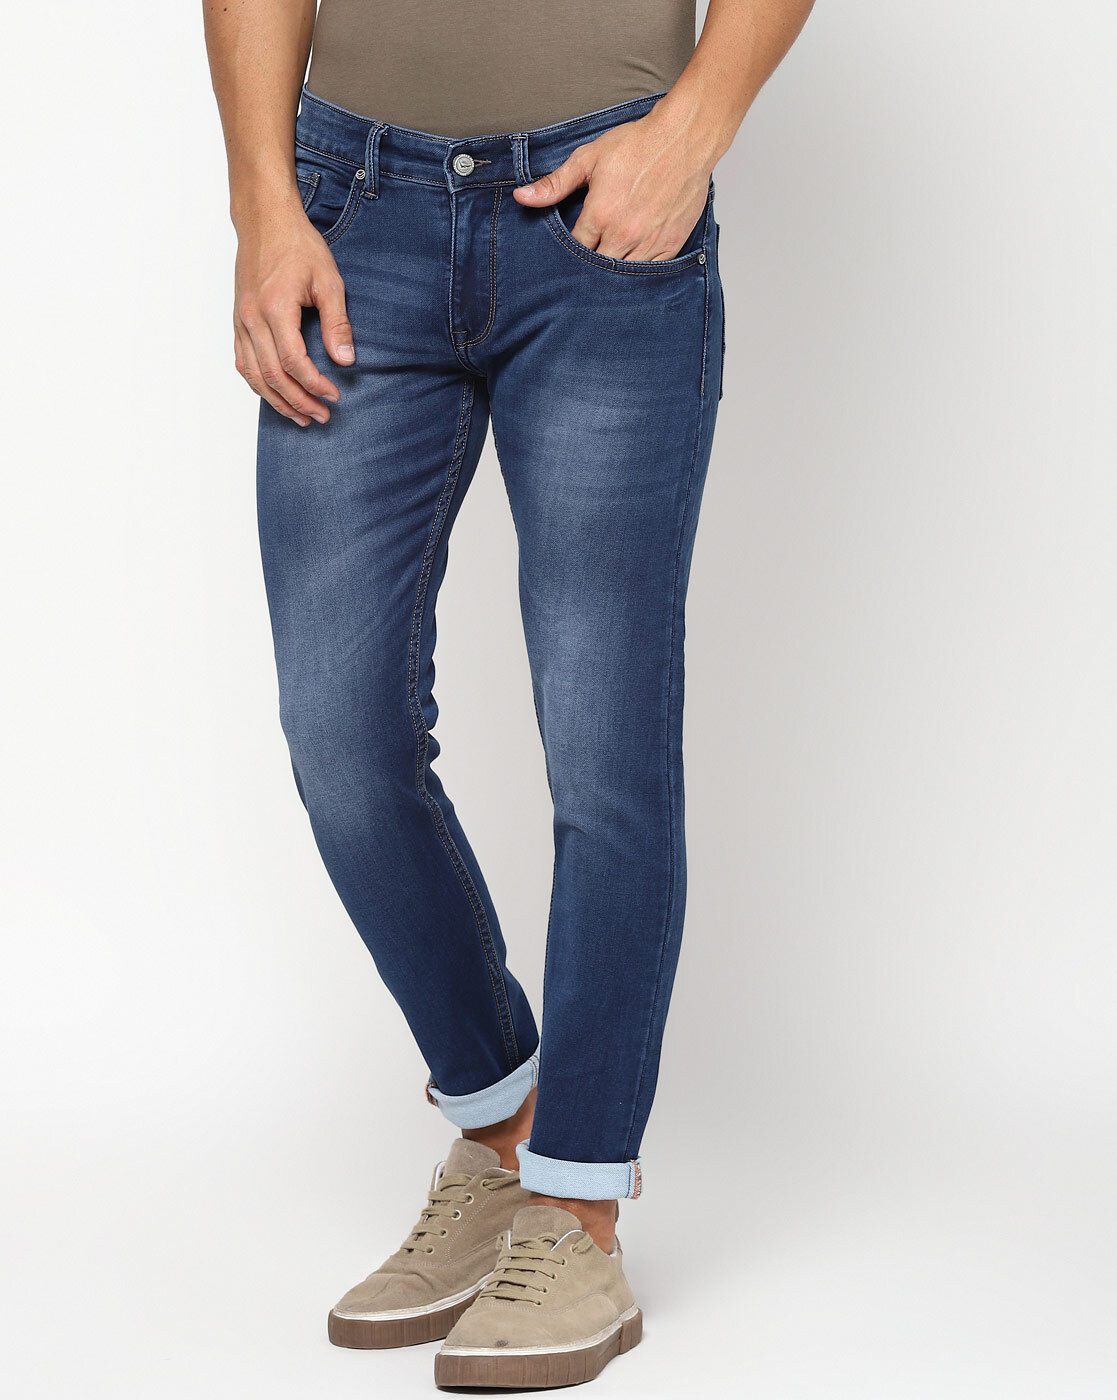 Buy Sky Blue Jeans for Men by TWILLS Online  Ajiocom